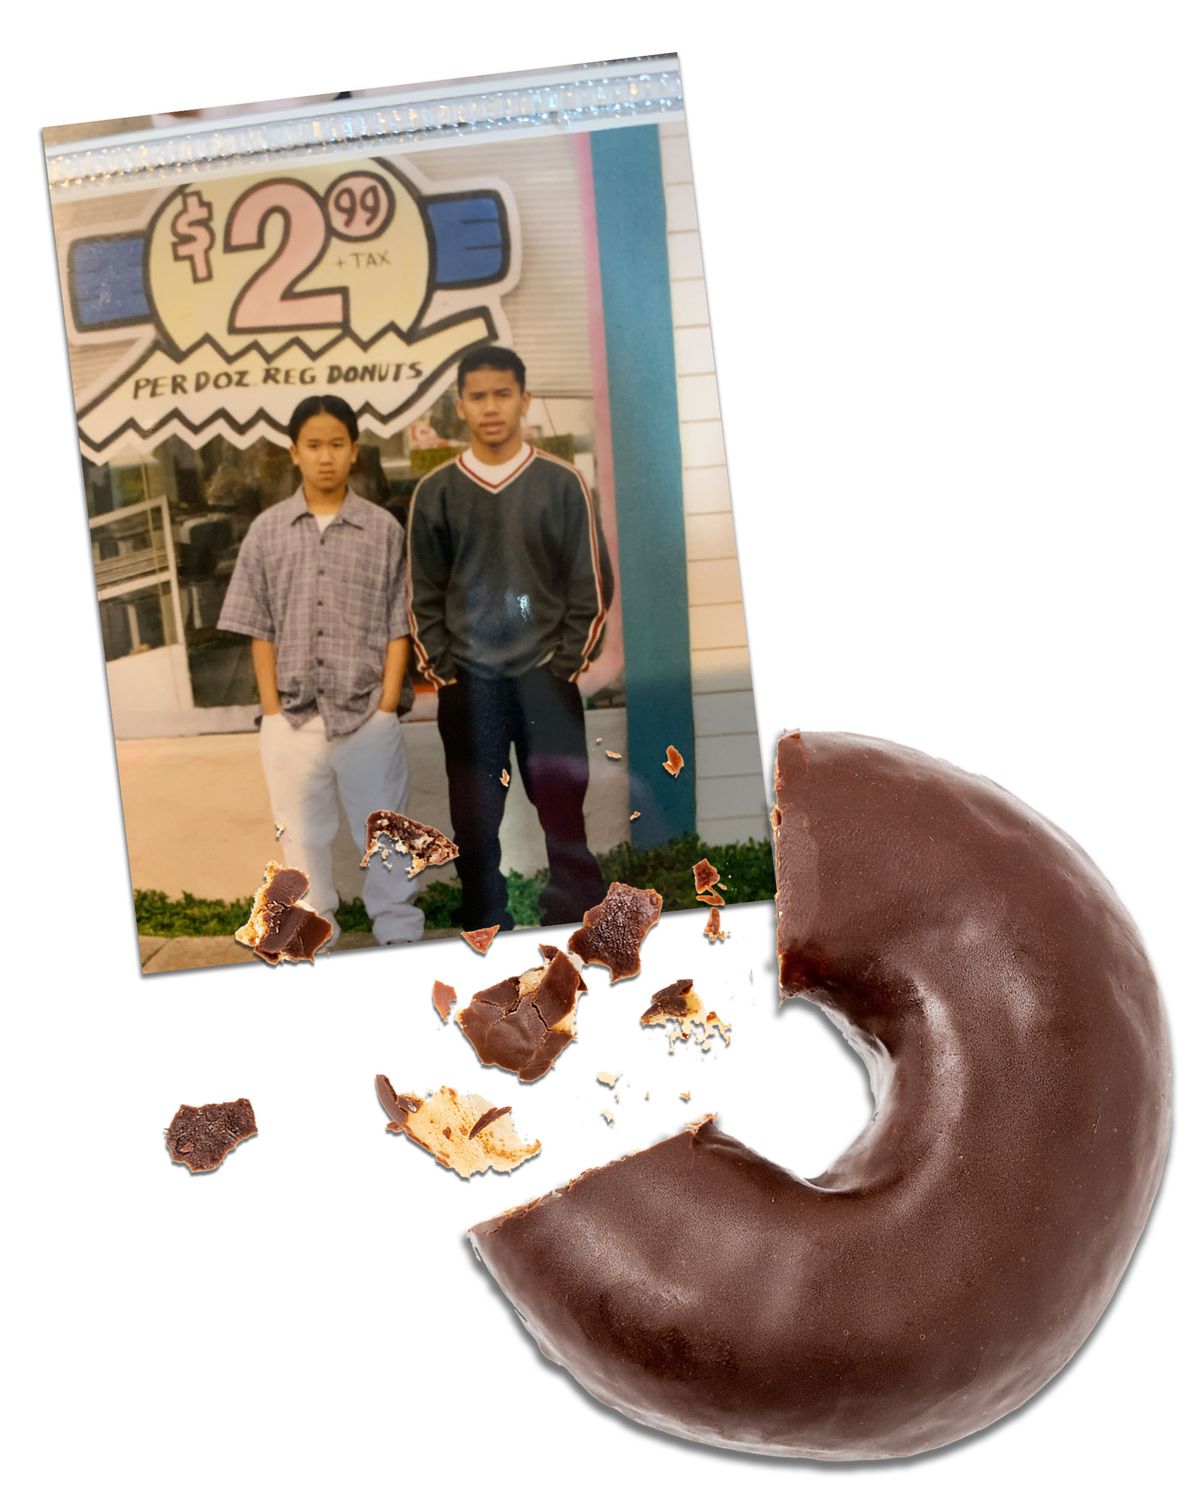 Adam Vaun (left) and his brother at DK’s Donuts in Orange.